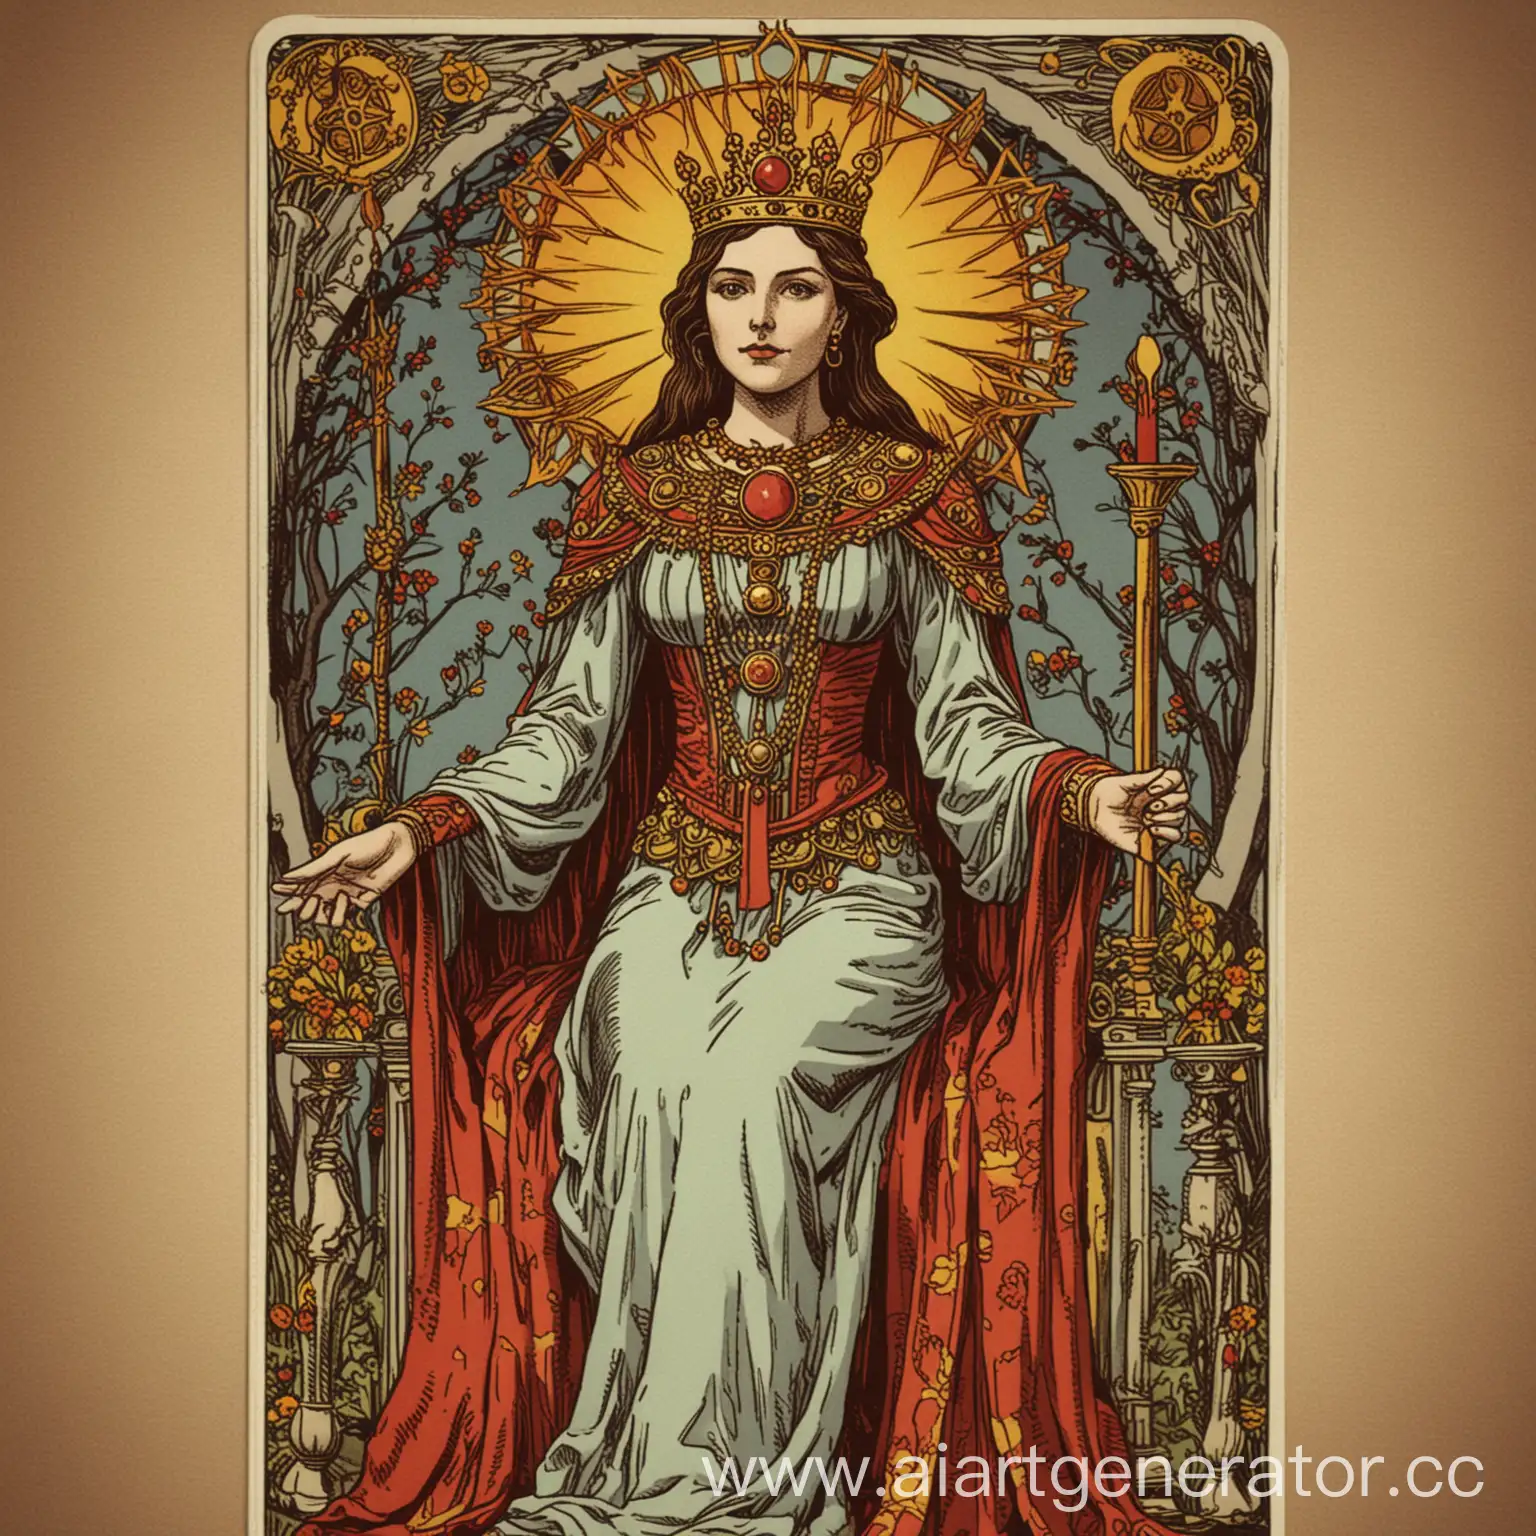 Empress-Tarot-Card-Powerful-Female-Figure-in-Lush-Natural-Setting